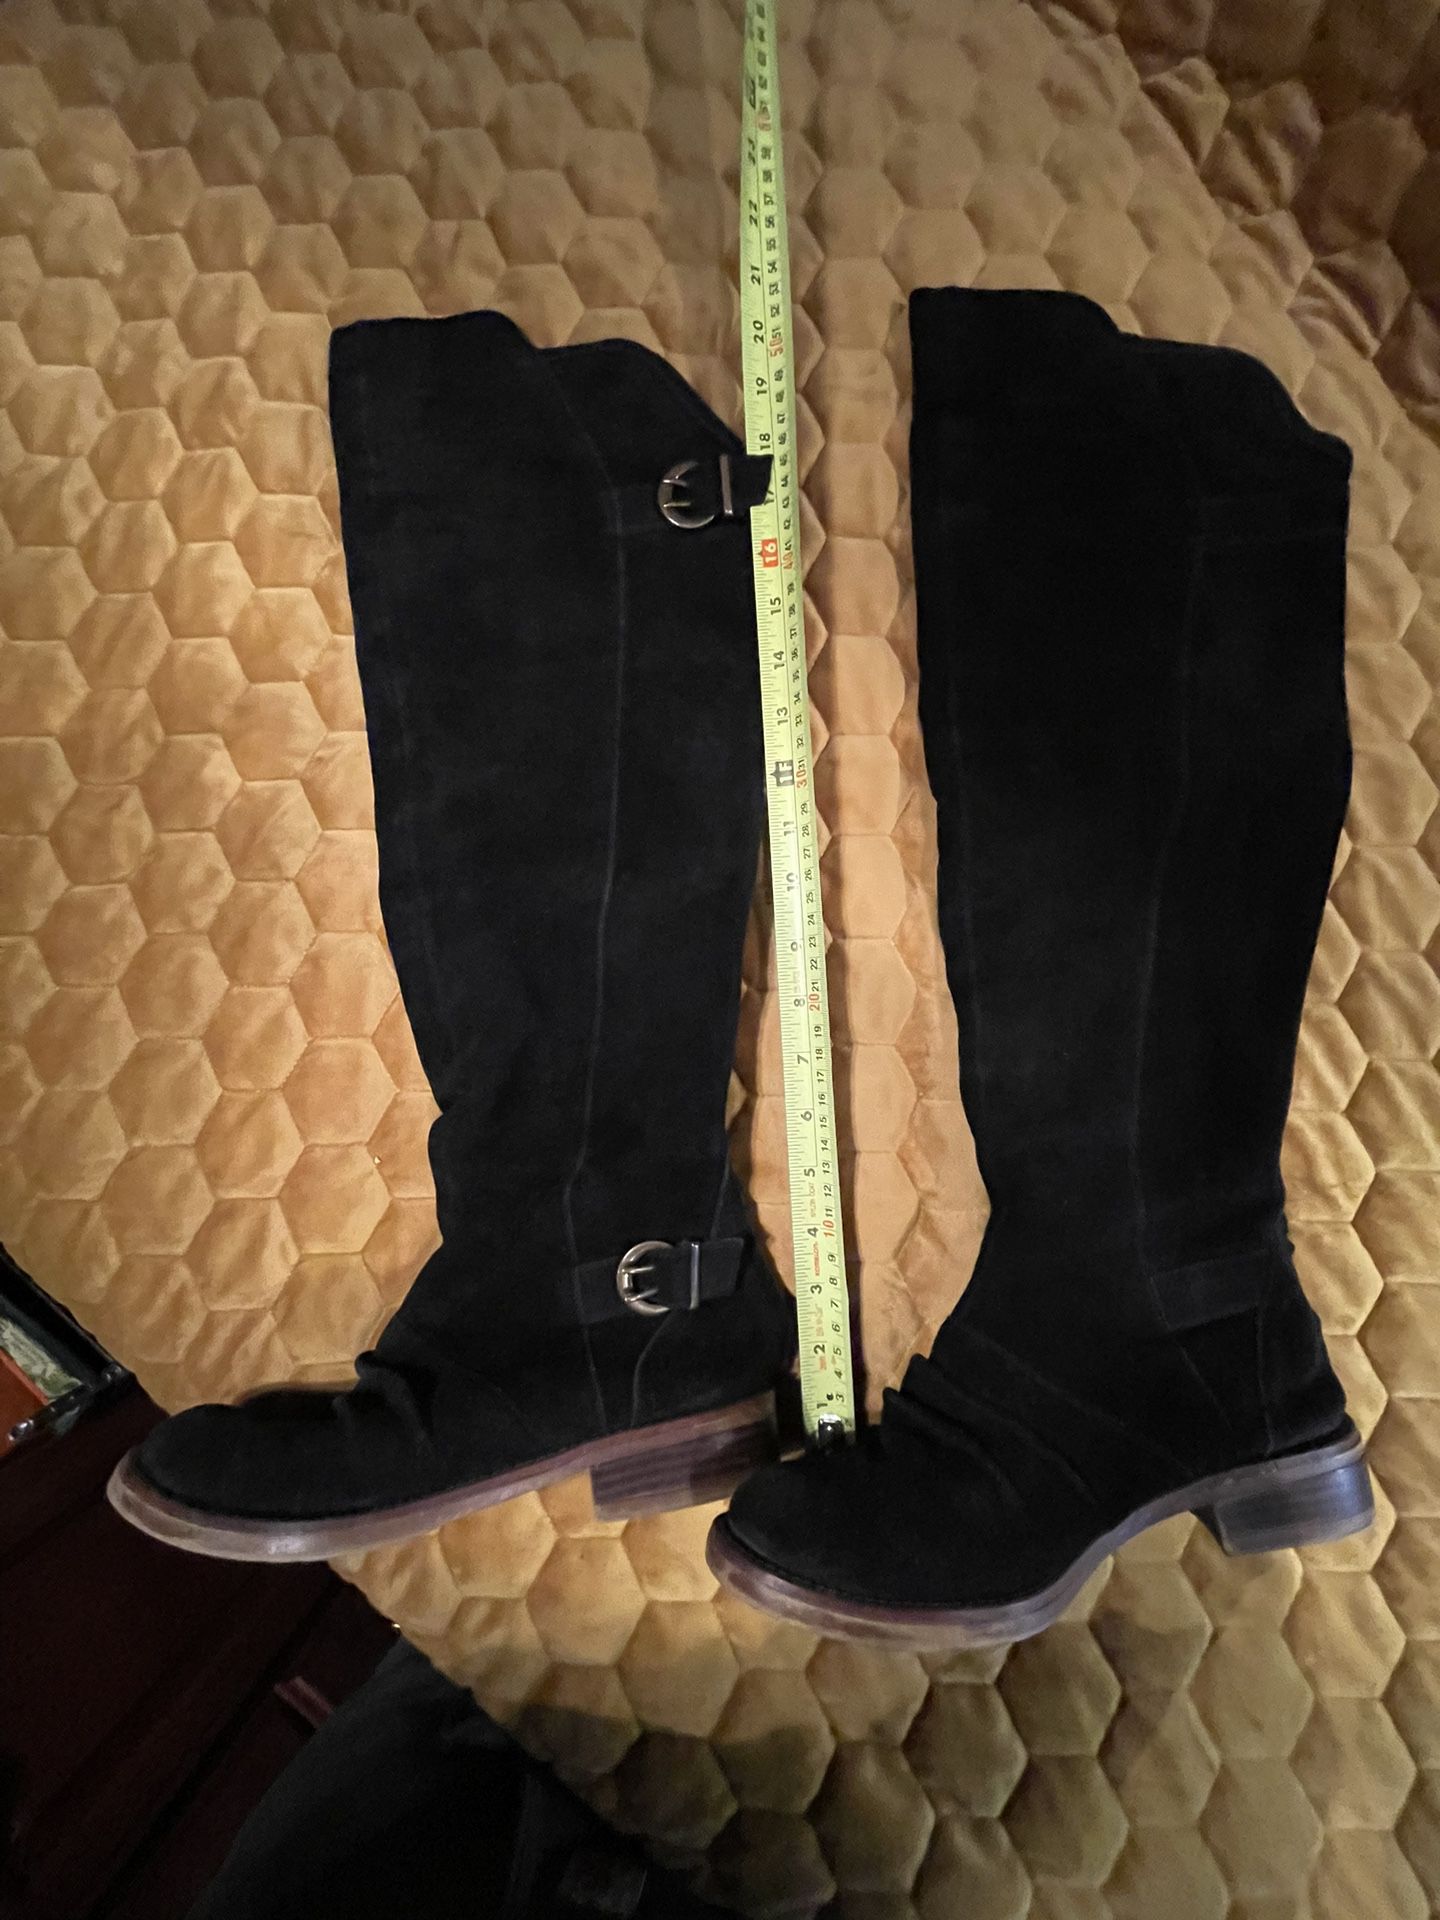 Kensie “Stella” over-the-knee sz 8.5 black suede boots